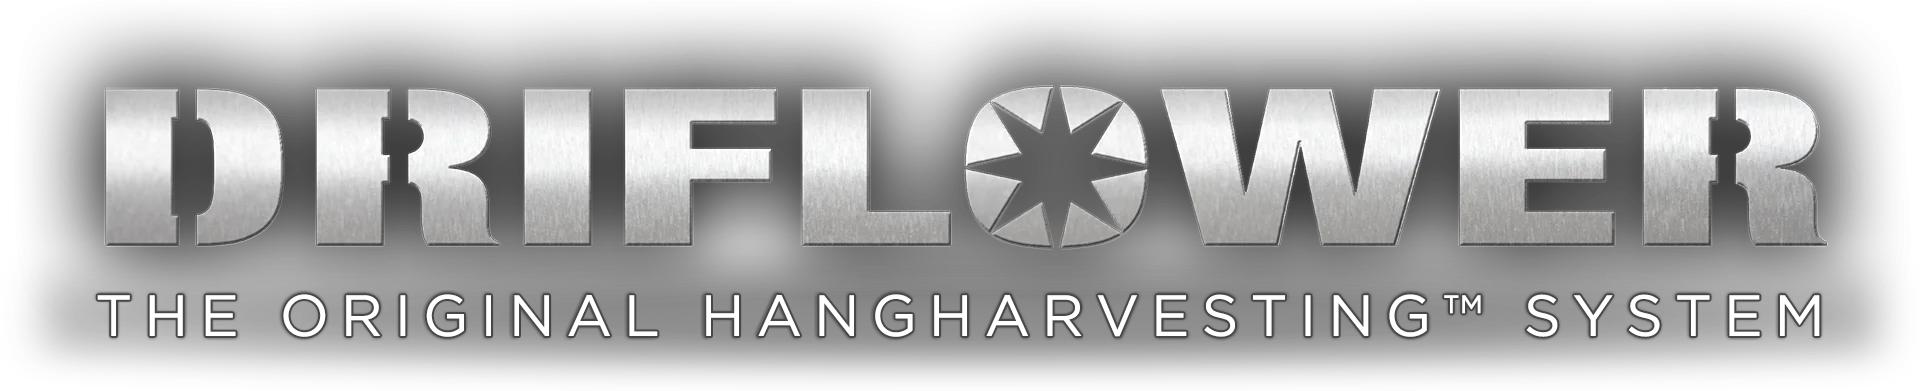 Driflower: The Original HangHarvesting System